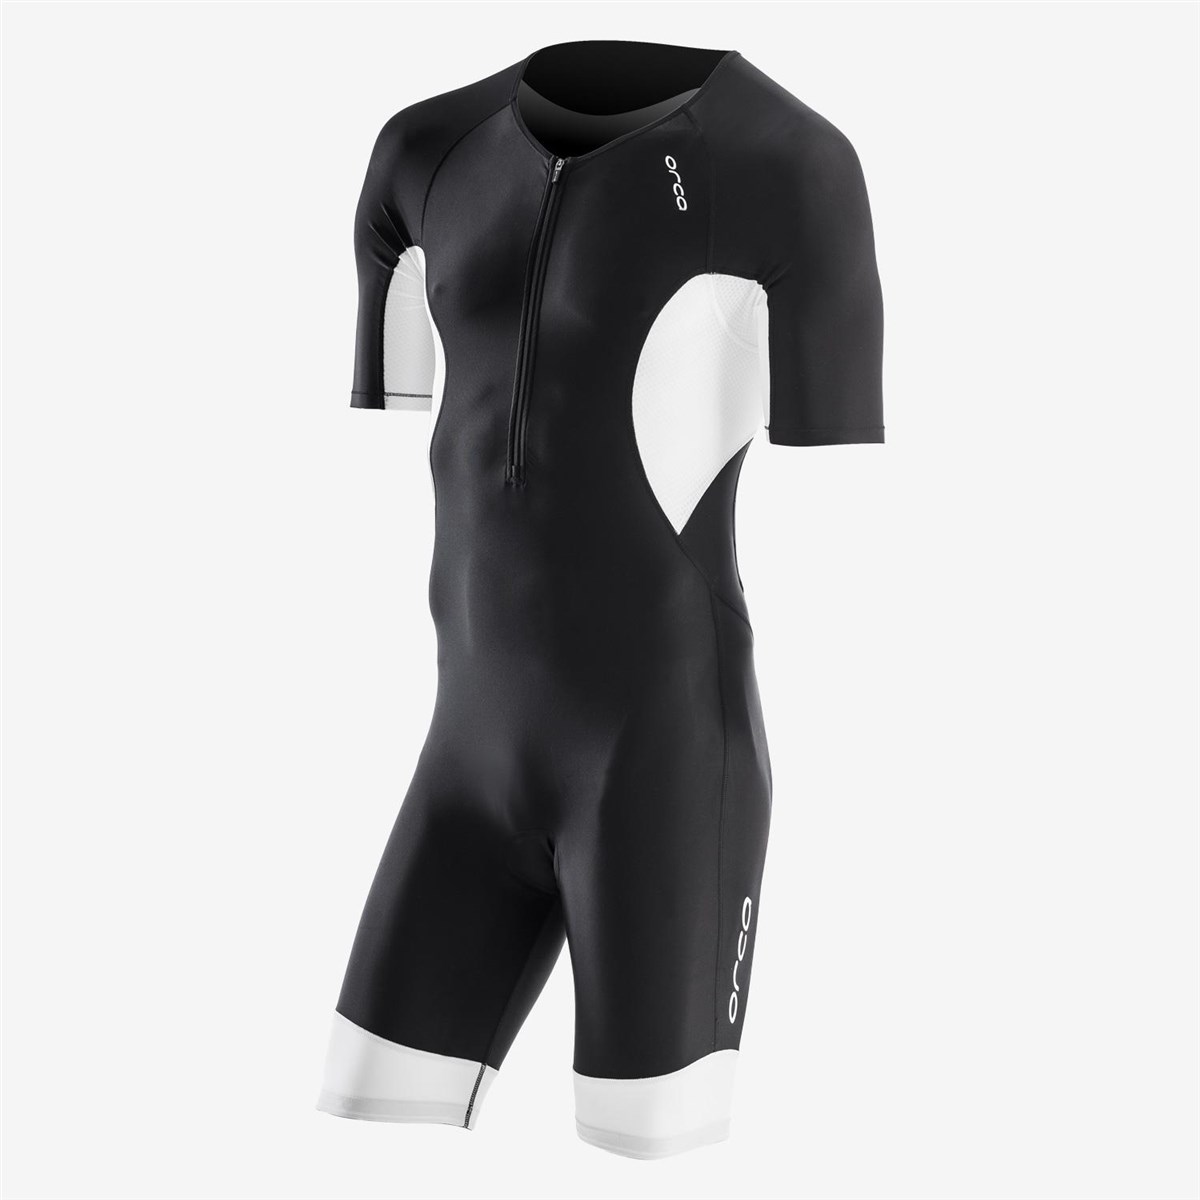 Orca Core Short Sleeve Race Suit product image